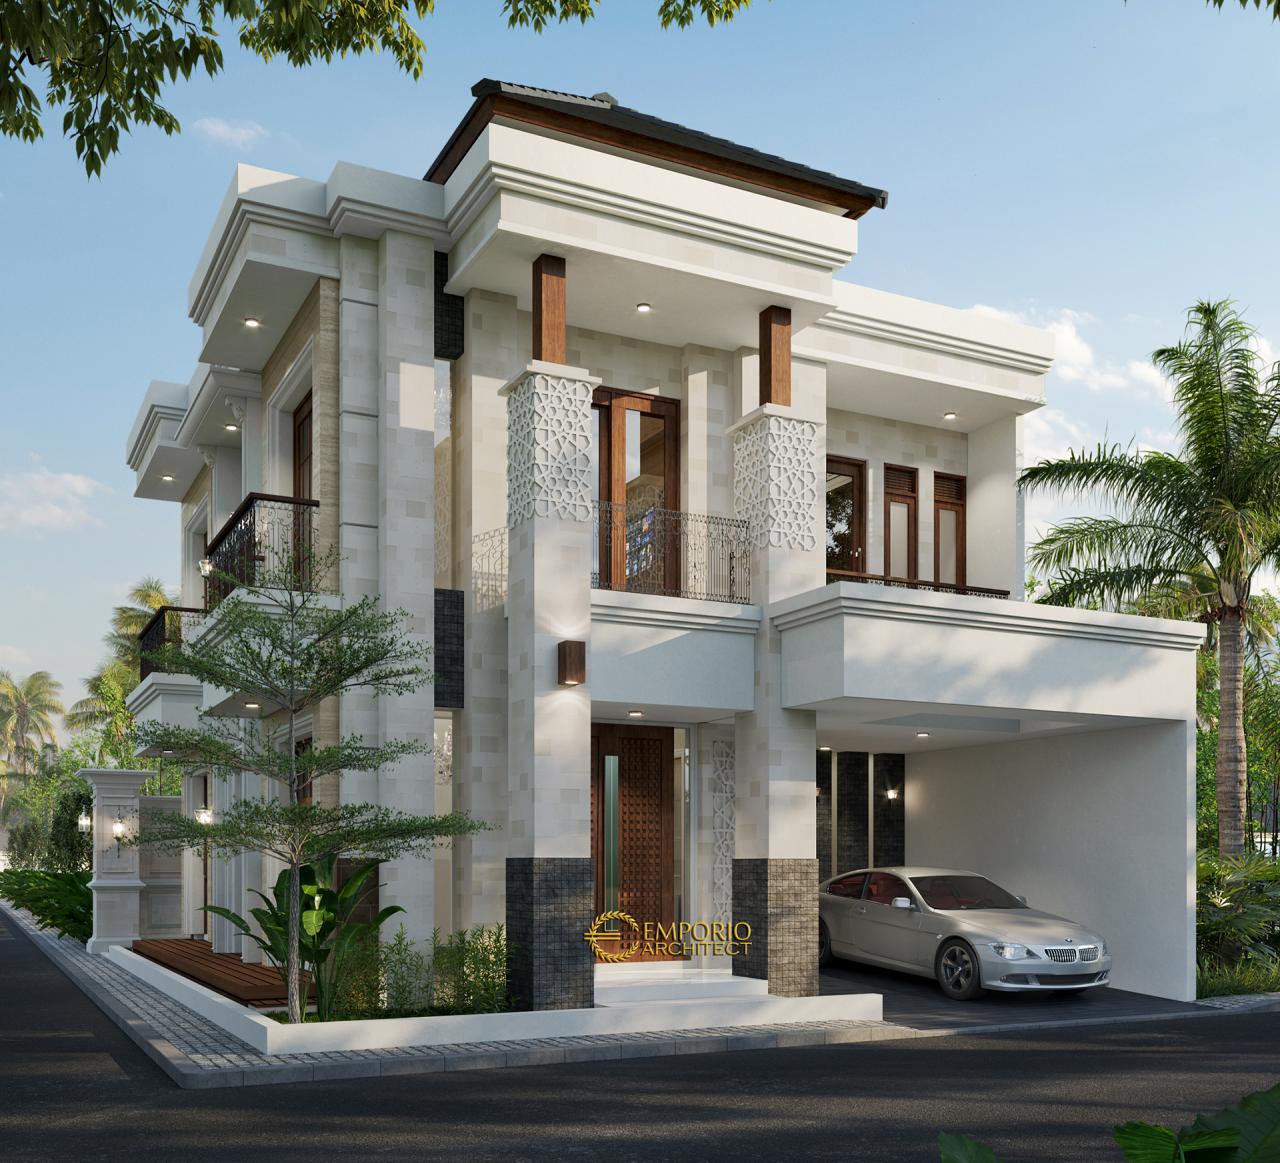 Desain Rumah Villa Bali Classic 2 Lantai Bapak Toni di Batam